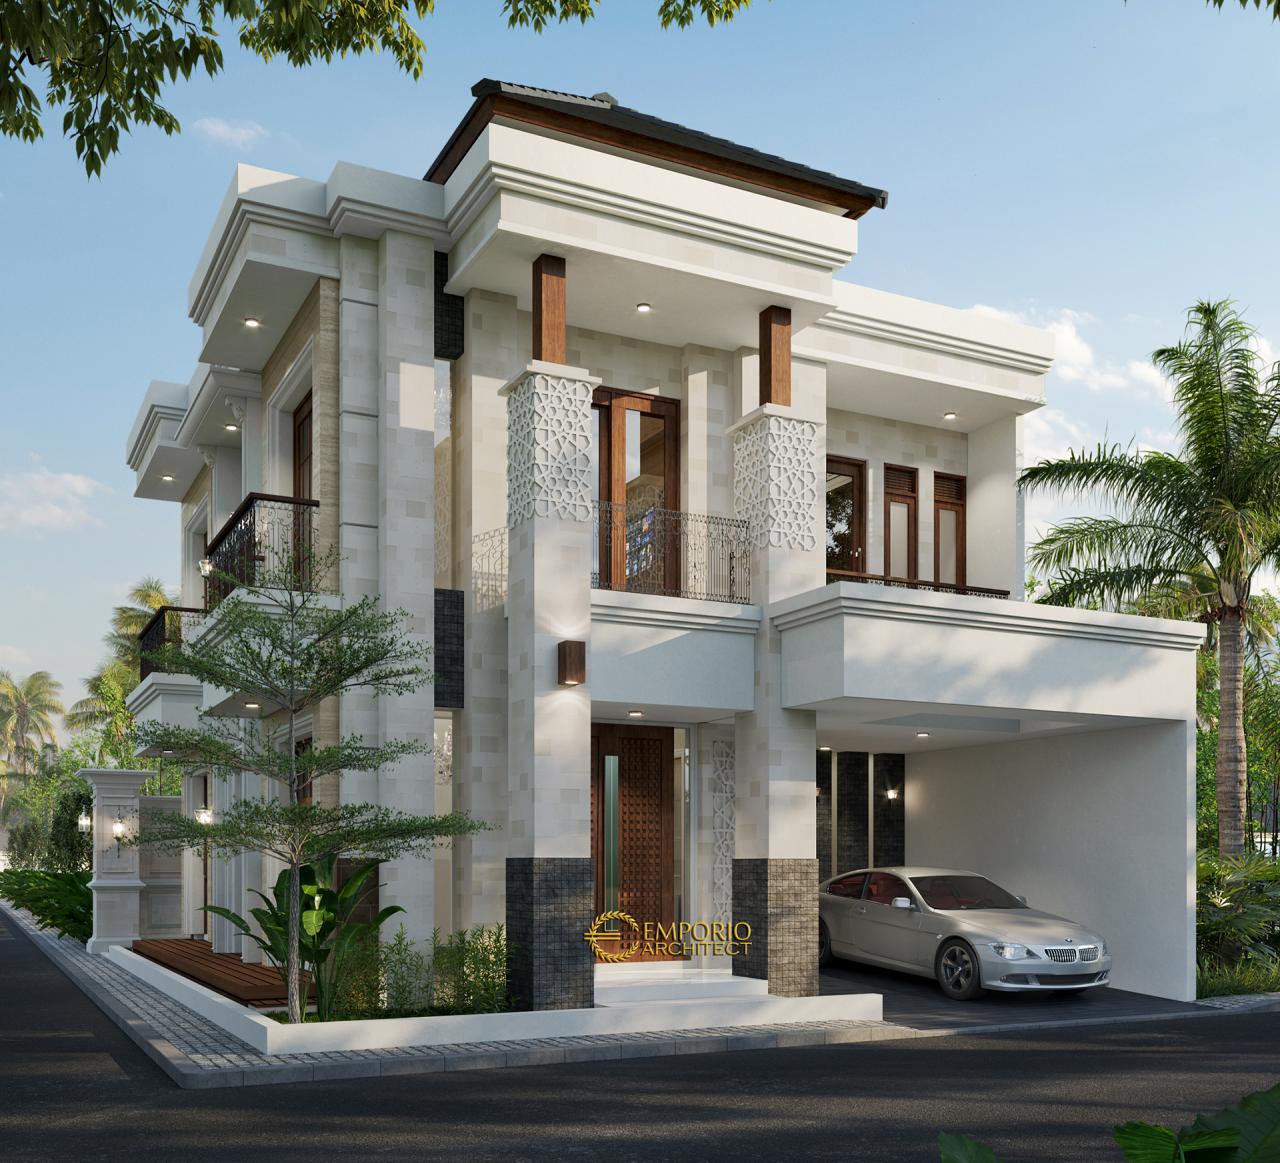 Desain Rumah Villa Bali Classic 2 Lantai Bapak Toni di Batam